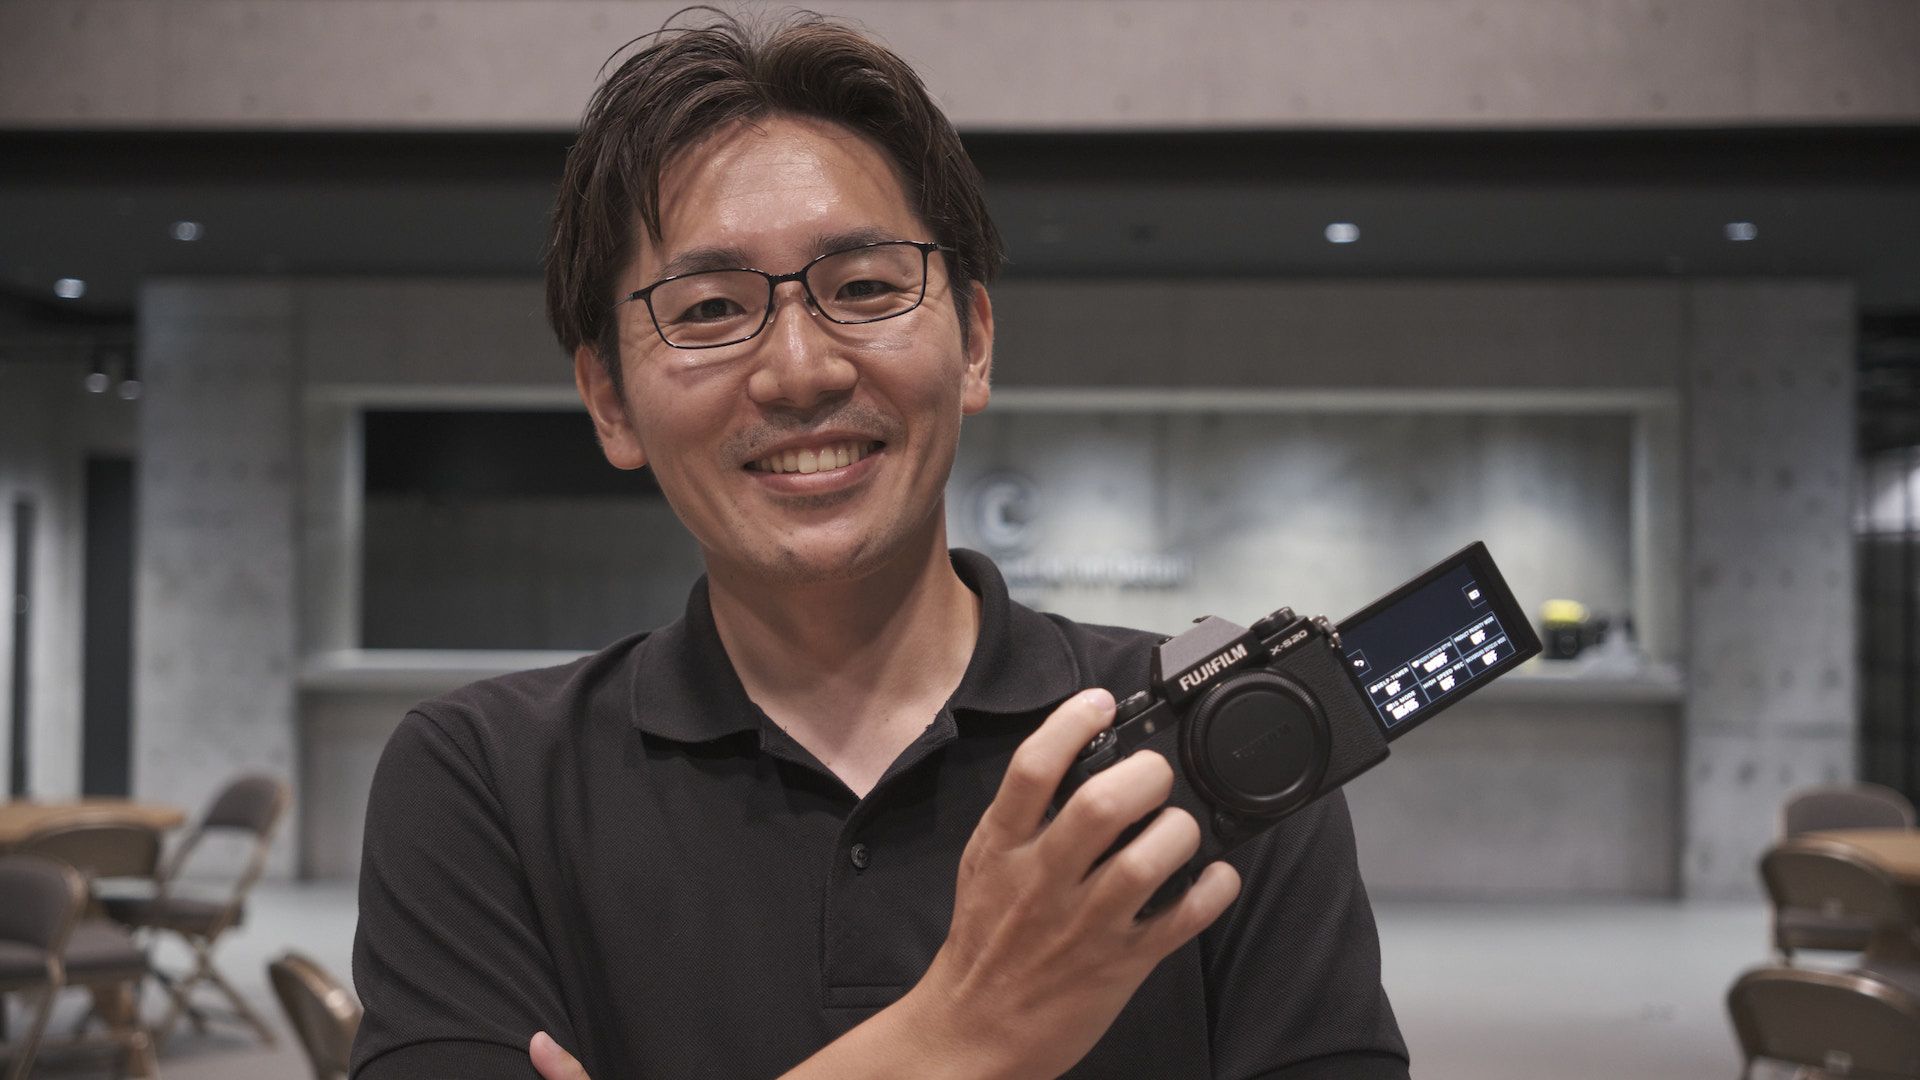 Fujifilm X-S20 Coming with Dedicated VLOG Icon on PSAM Dial - Fuji Rumors